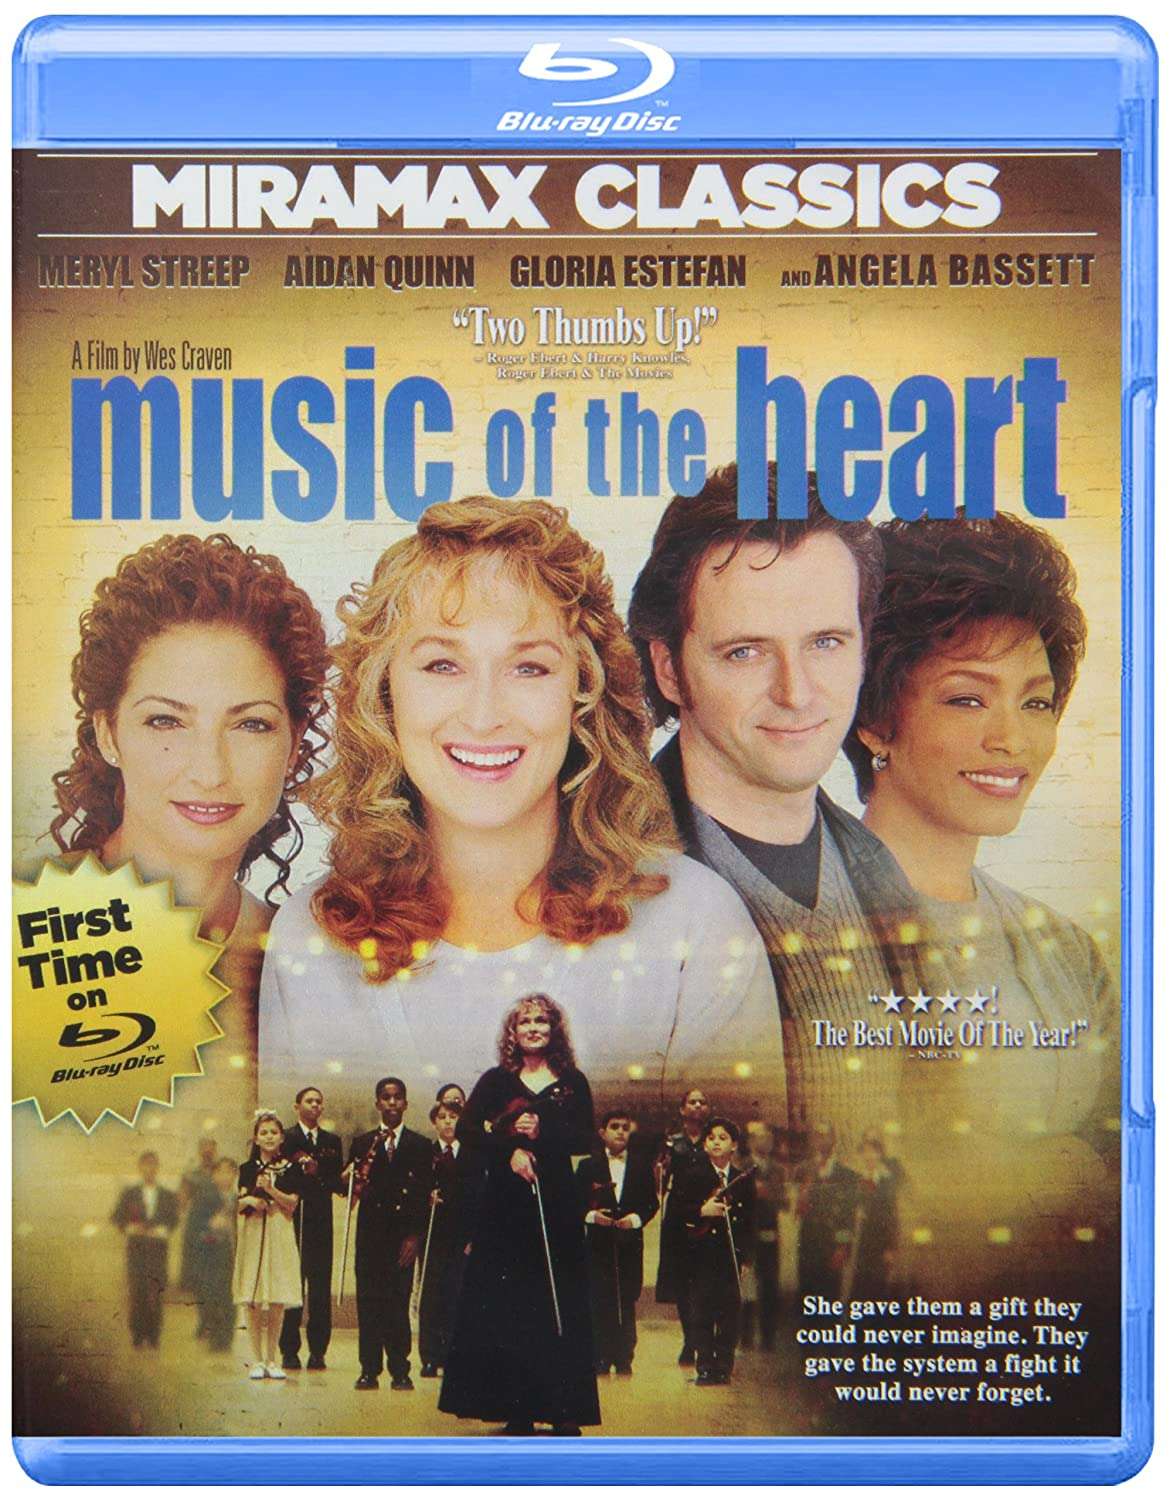 La musica del cuore (1999) HDRip 720p DTS Ac3 ITA (DVD Resync) ENG Sub ITA x264